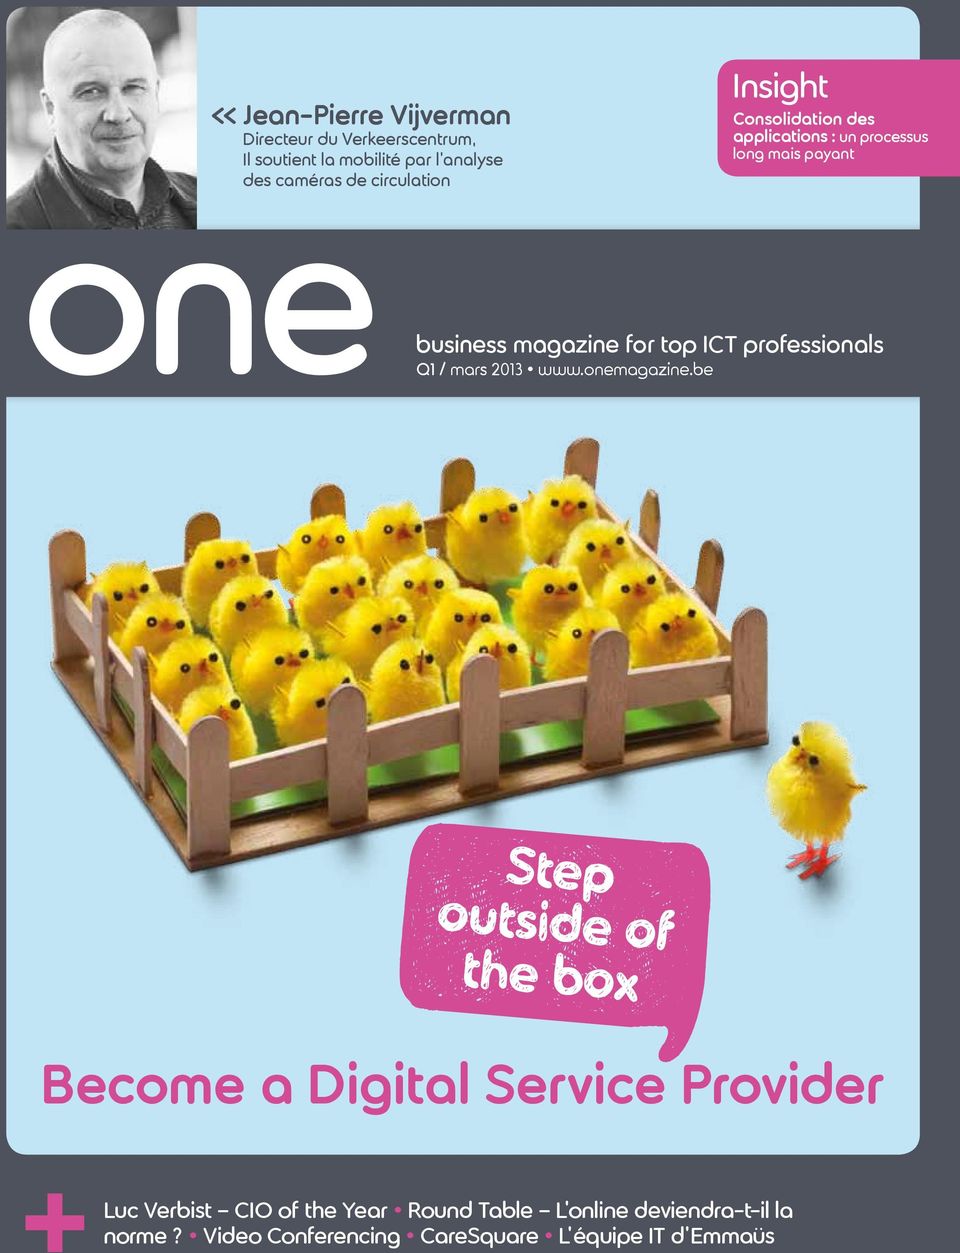 ict professionals Q1 / mars 2013 www.onemagazine.